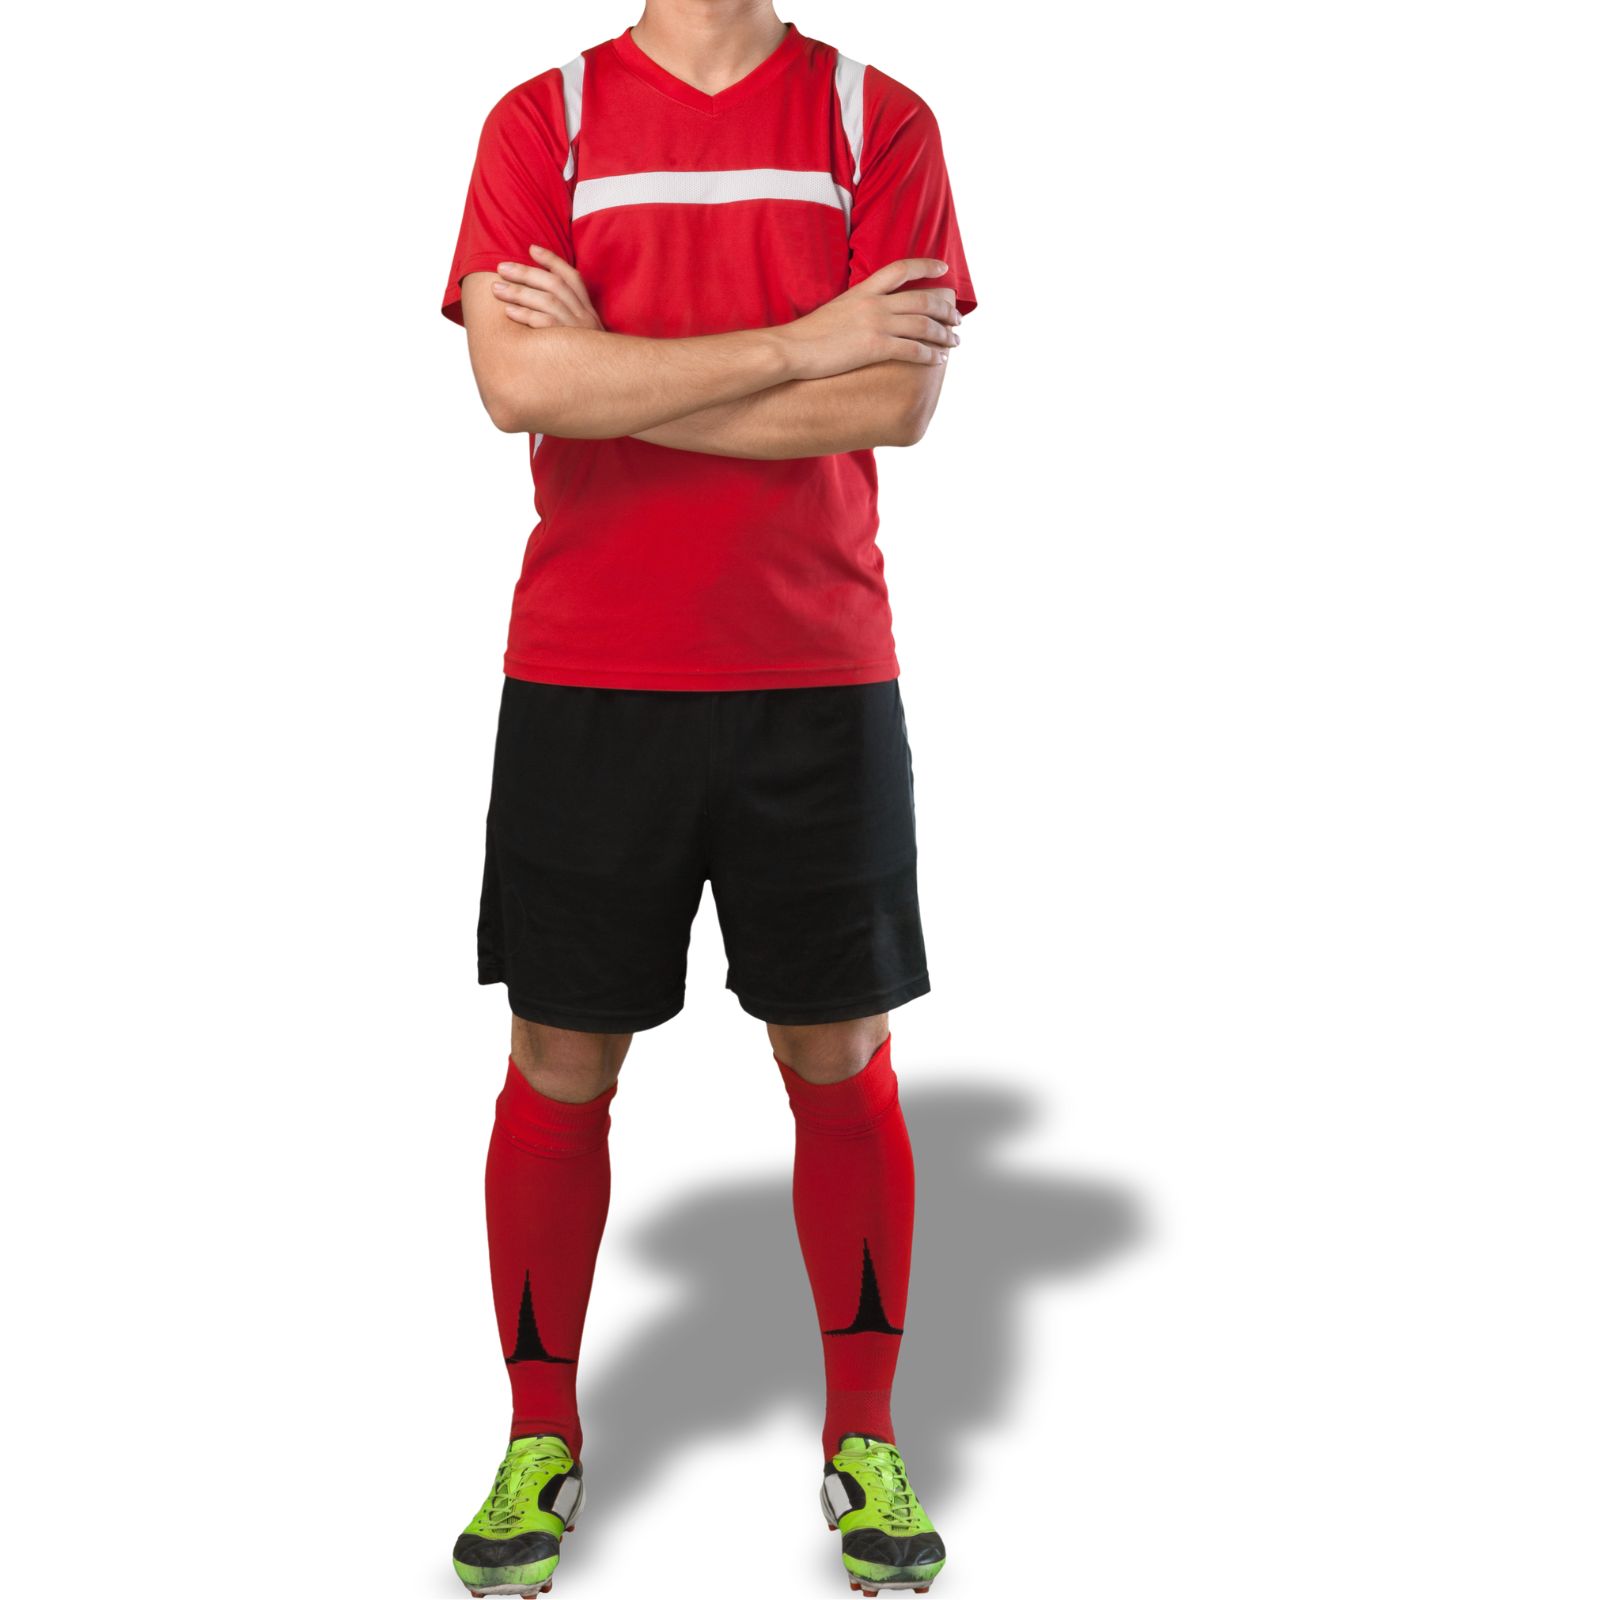 Premium Quality Custom Design of Soccer Uniform.